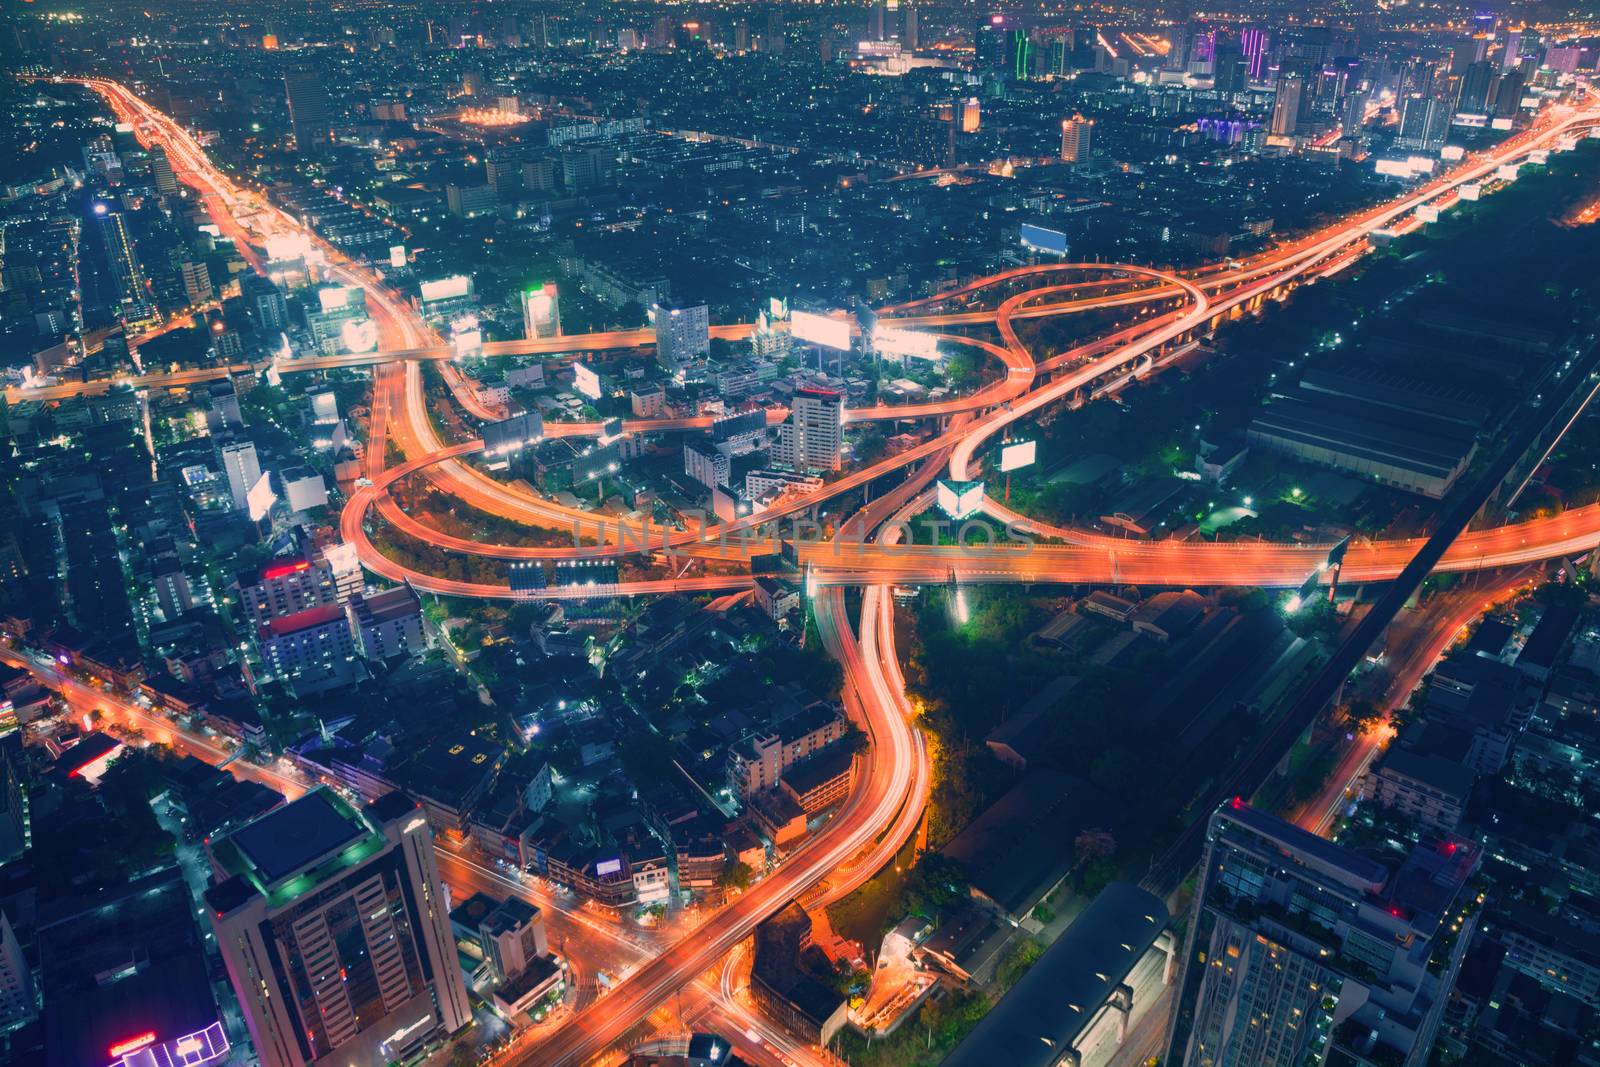 Bangkok Expressway ro Autobahn at night or Twilight, Aerial Scenic view 